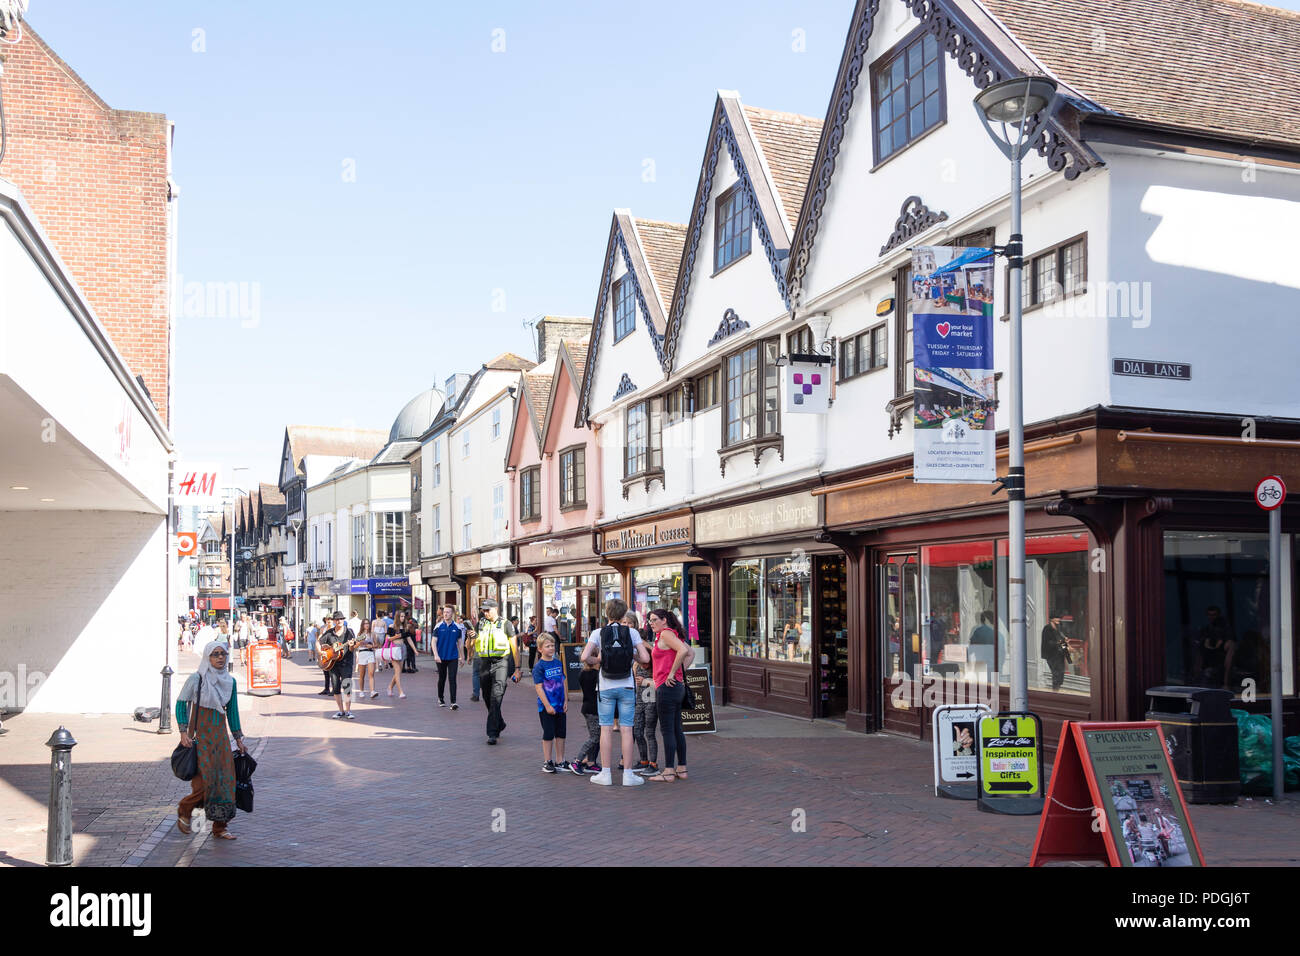 Pedestrianised Tavern Street, Ipswich, Suffolk, England, United Kingdom Stock Photo